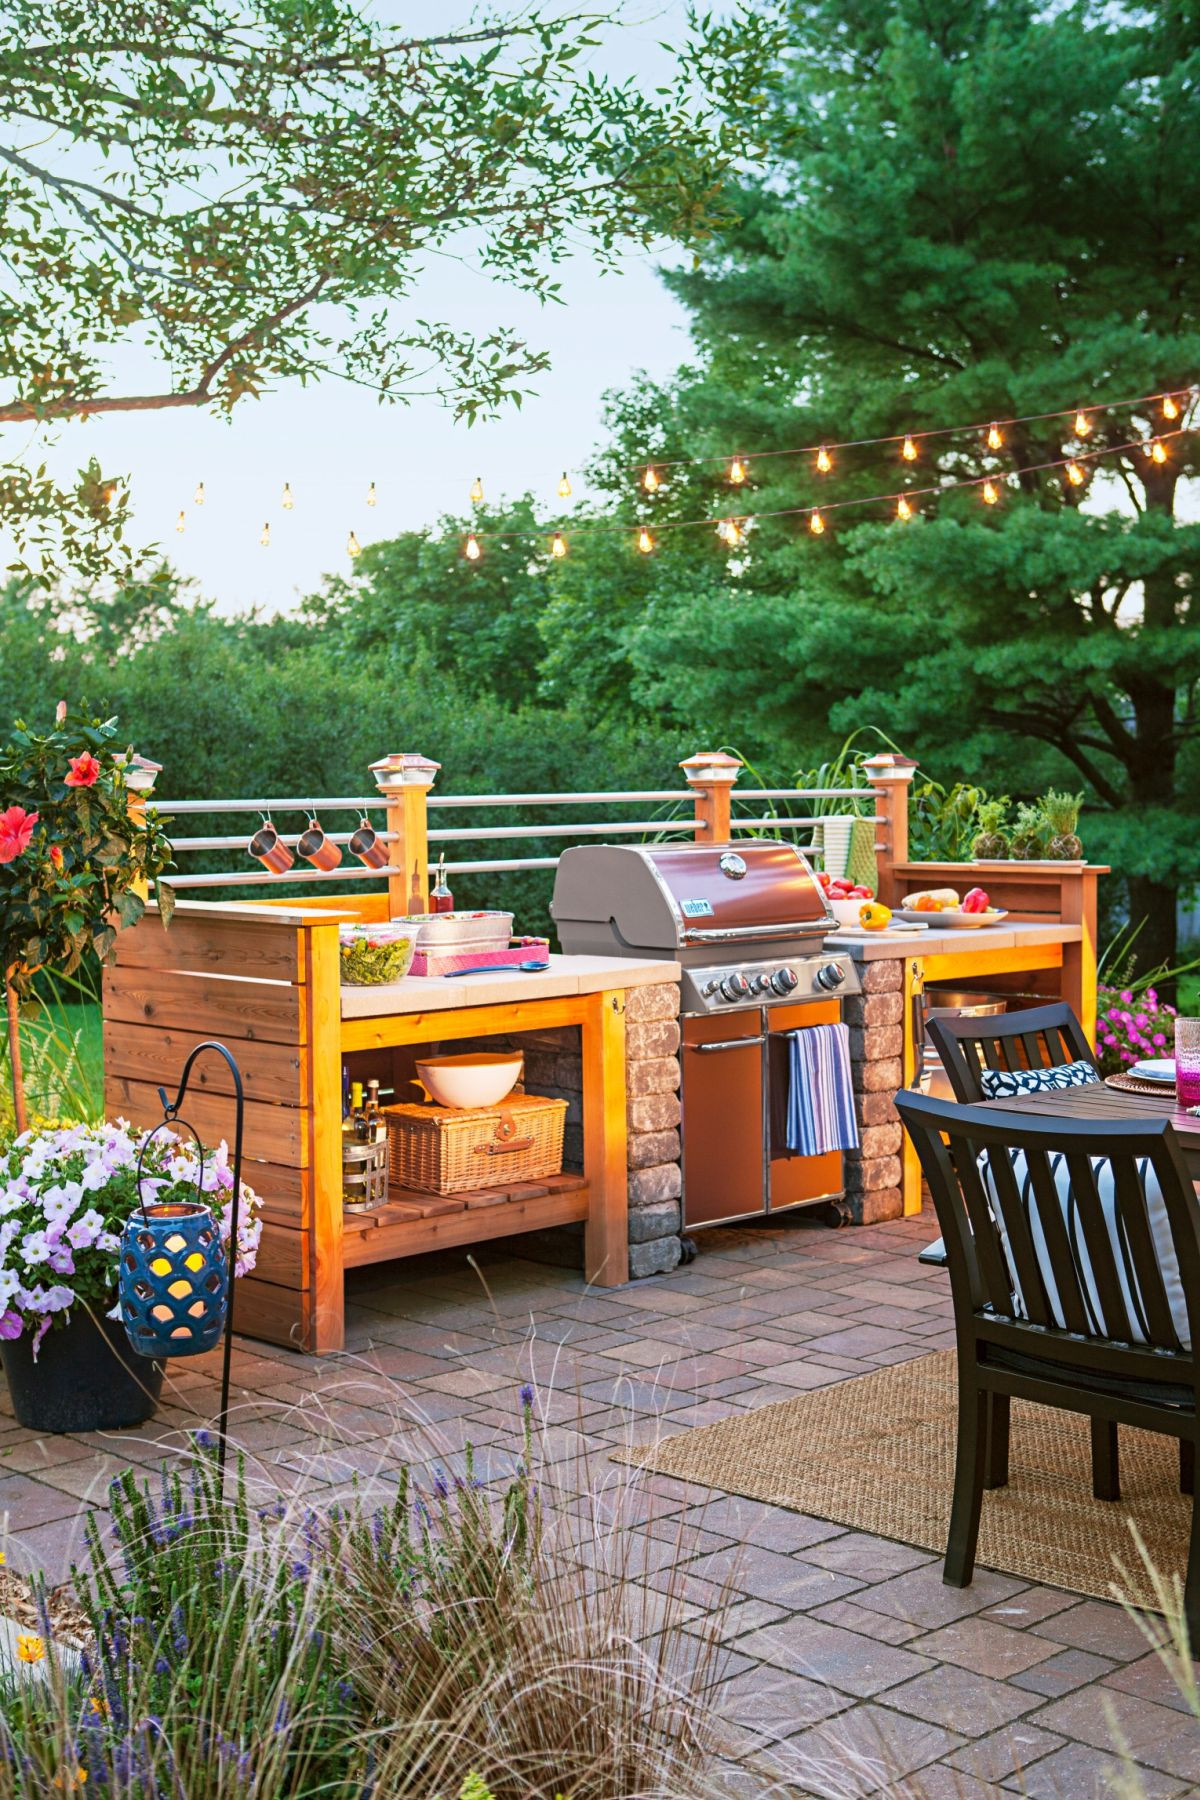 Cinder Block Outdoor Kitchen
 Outdoor Kitchen designs A Great Way To Enjoy A Beautiful Day